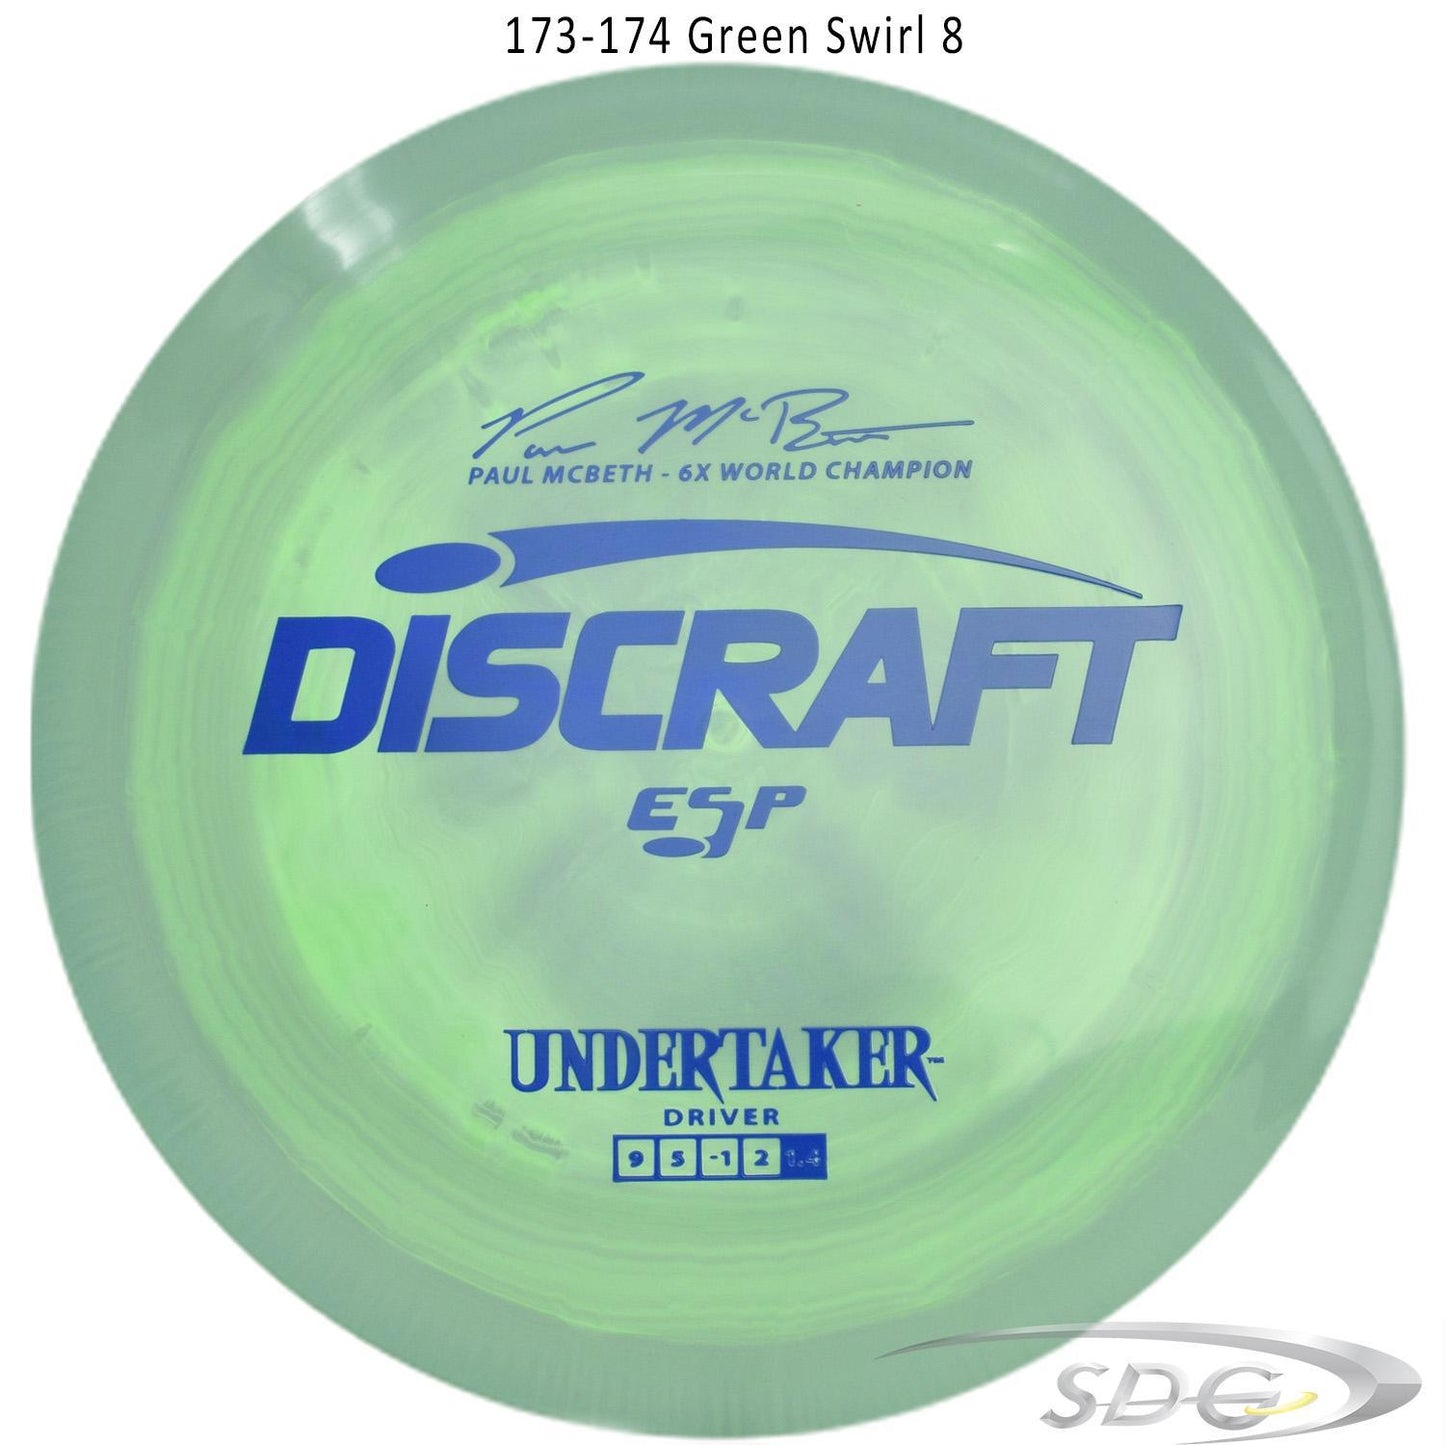 discraft-esp-undertaker-6x-paul-mcbeth-signature-series-disc-golf-distance-driver-1 173-174 Green Swirl 8 